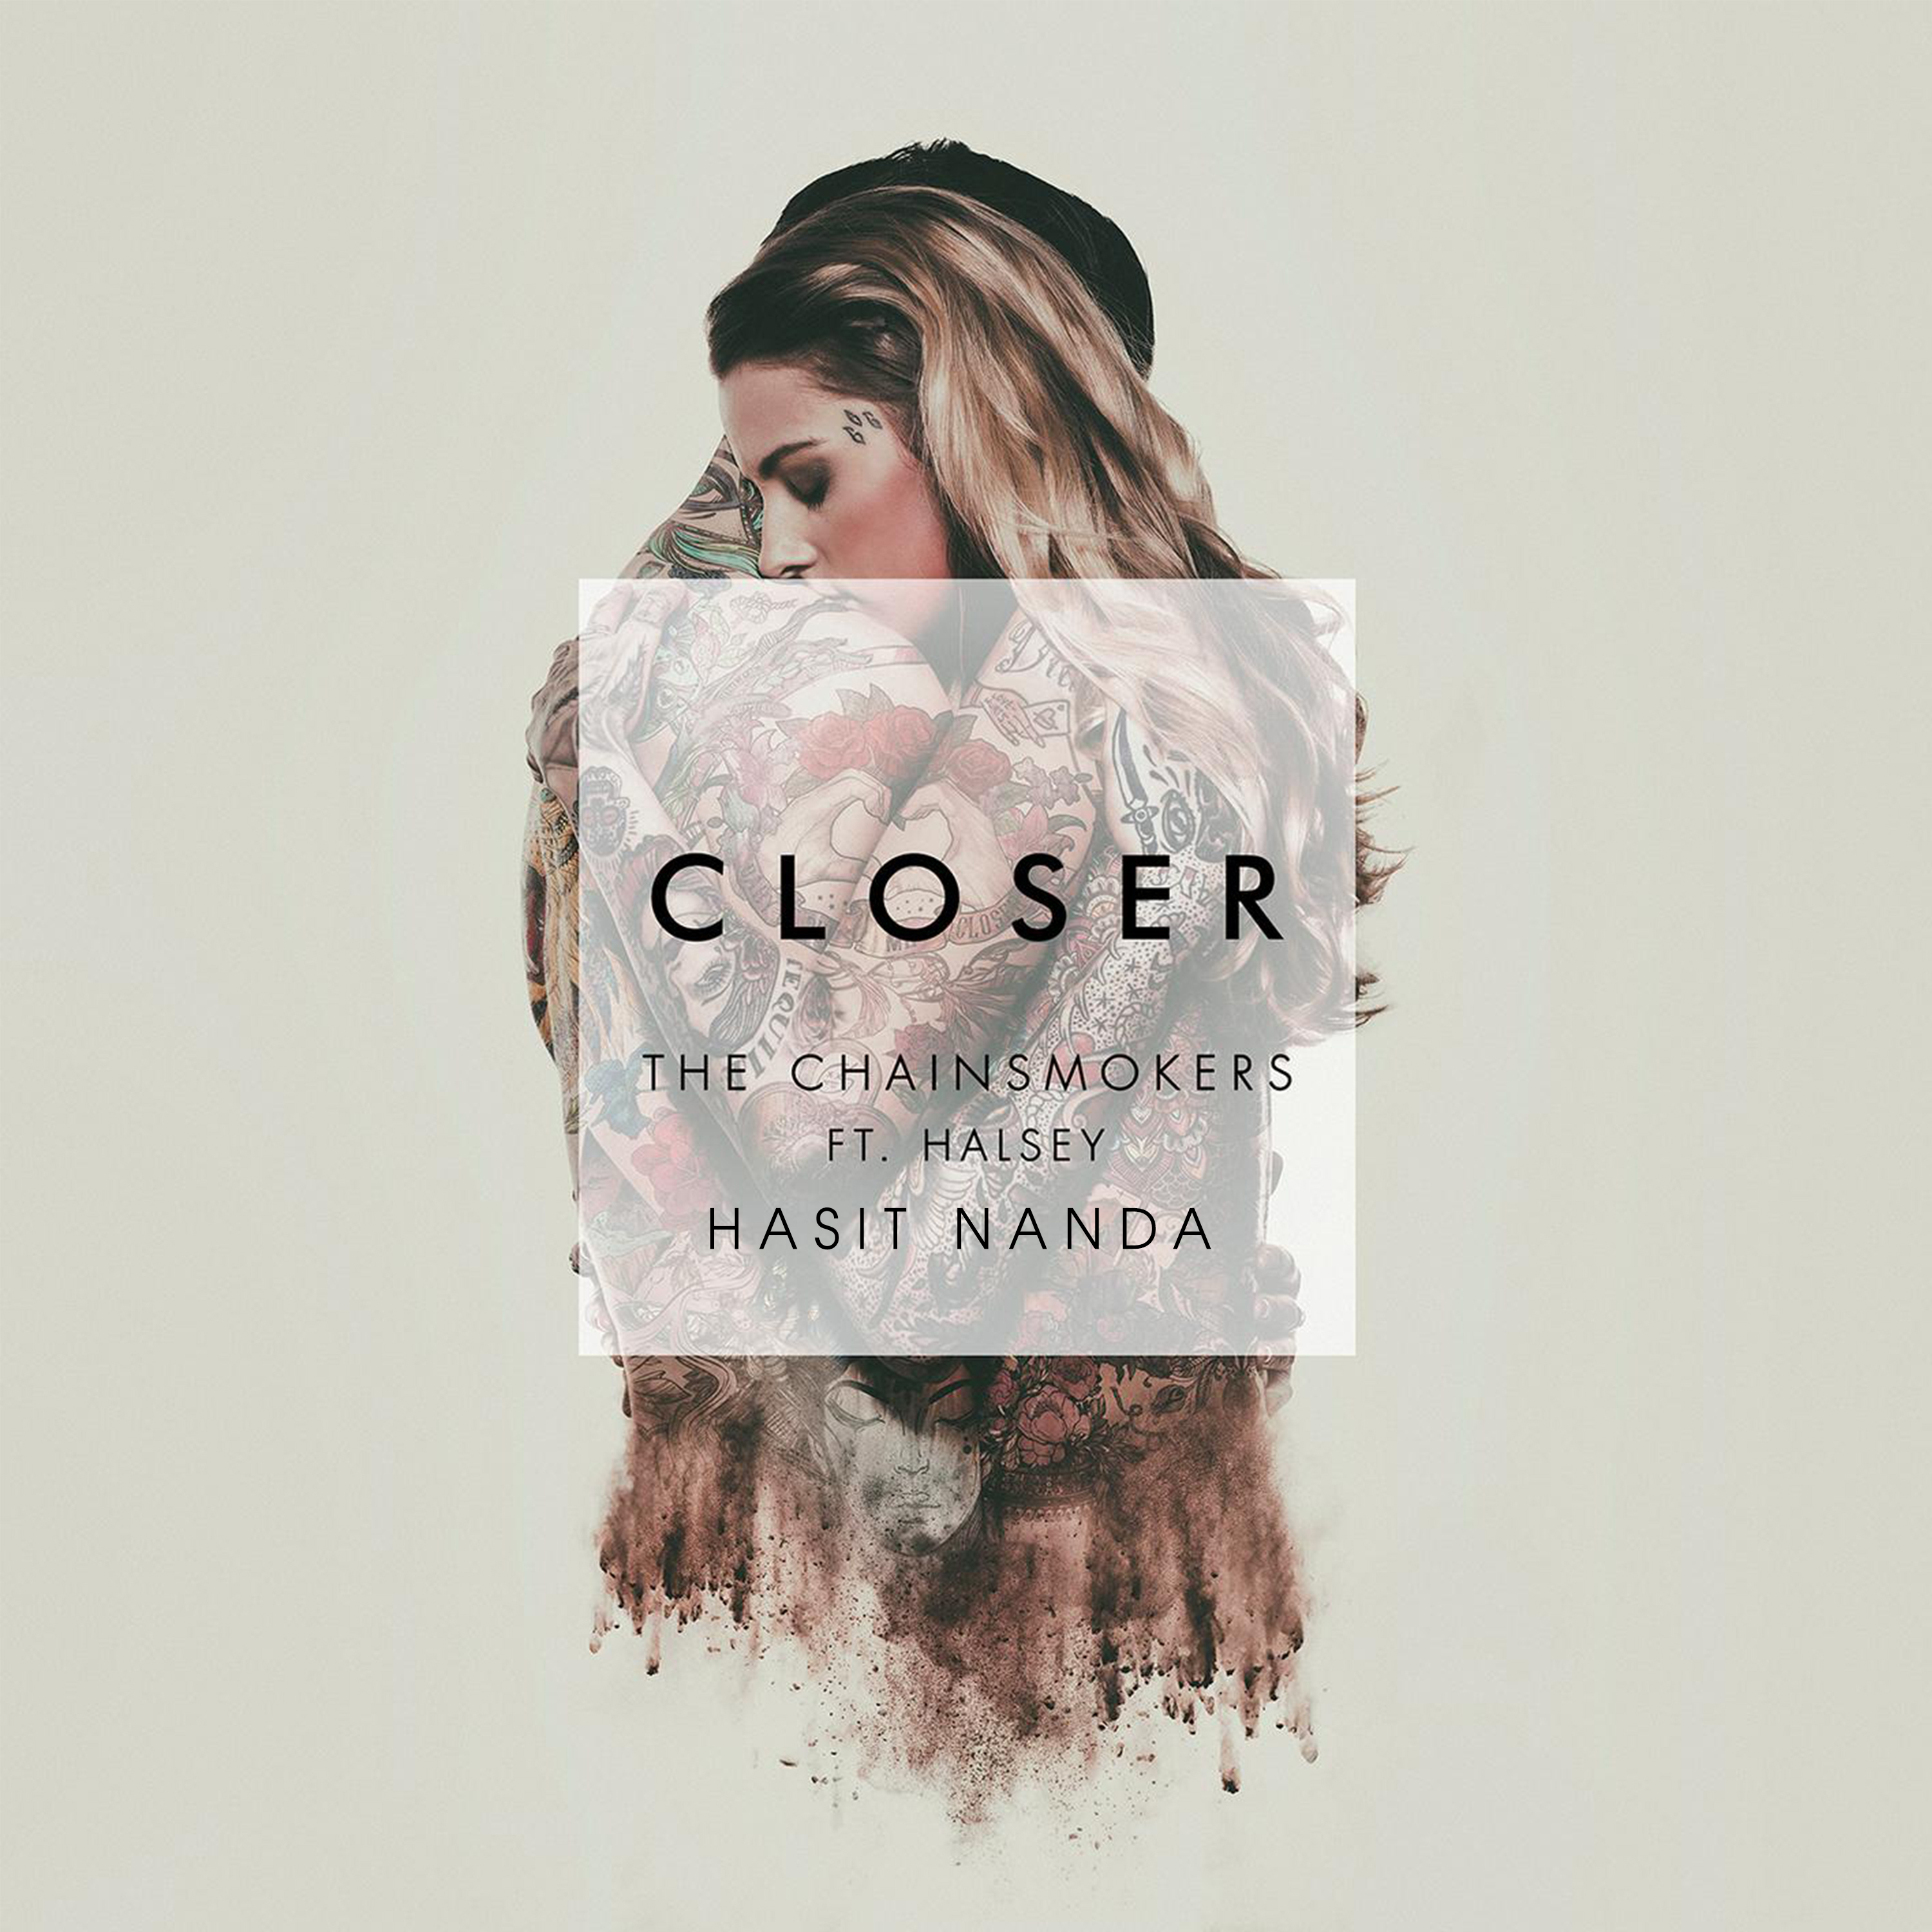 The Chainsmokers - Closer ft. Halsey (MIDI) - Hasit Nanda